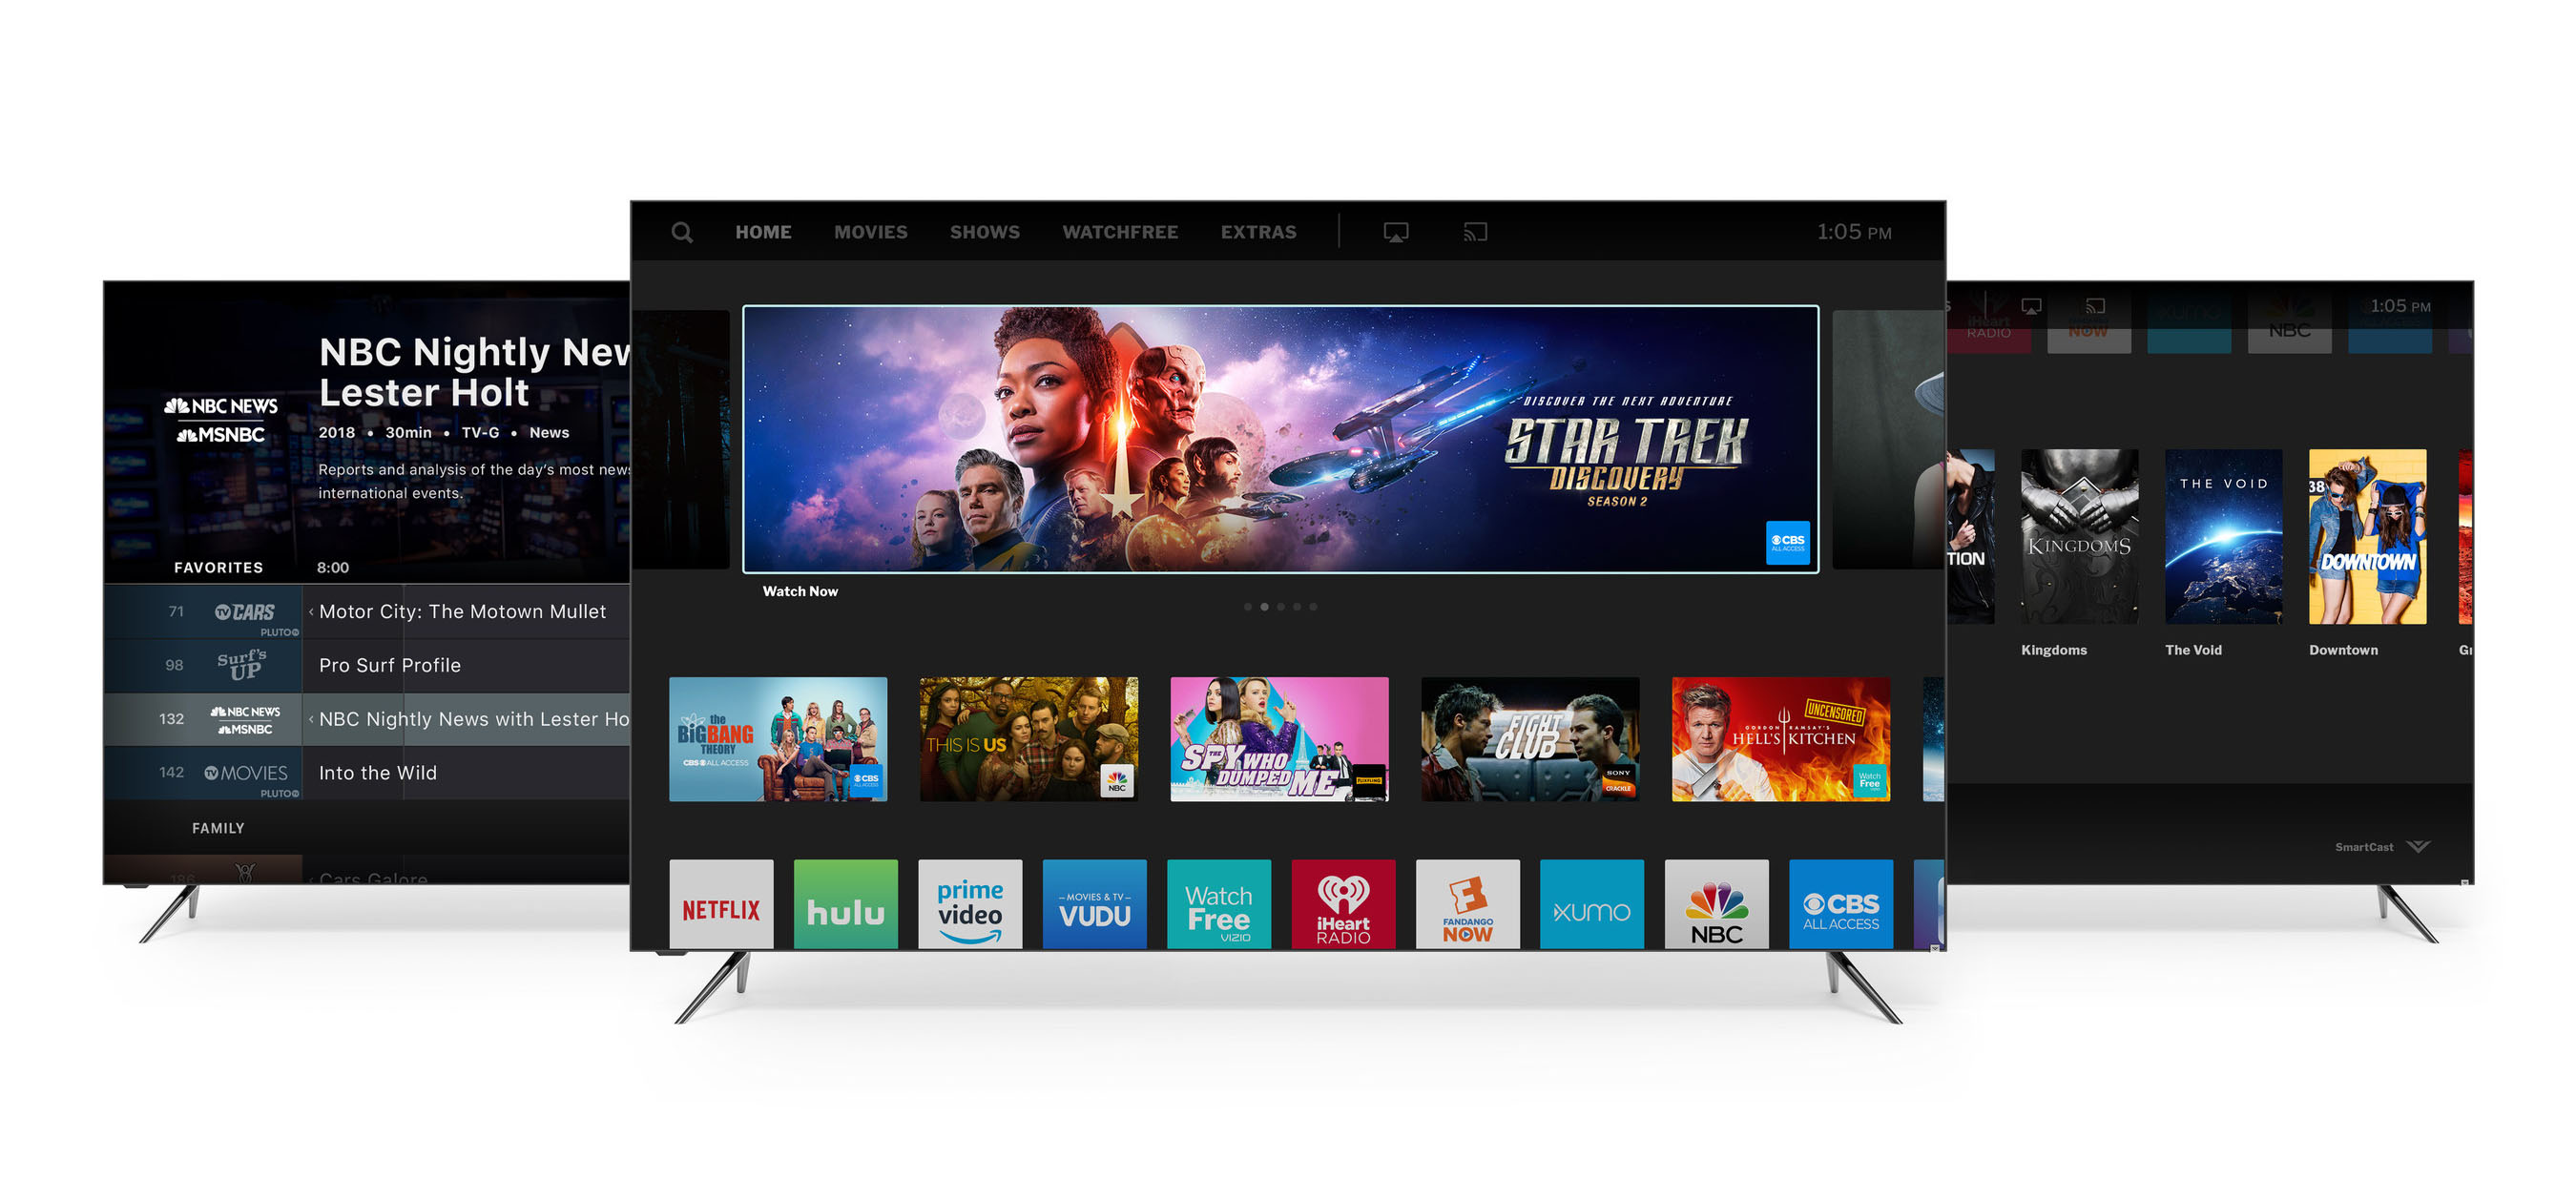 Vil Hulu live jobbe med Vizio Smart TV?